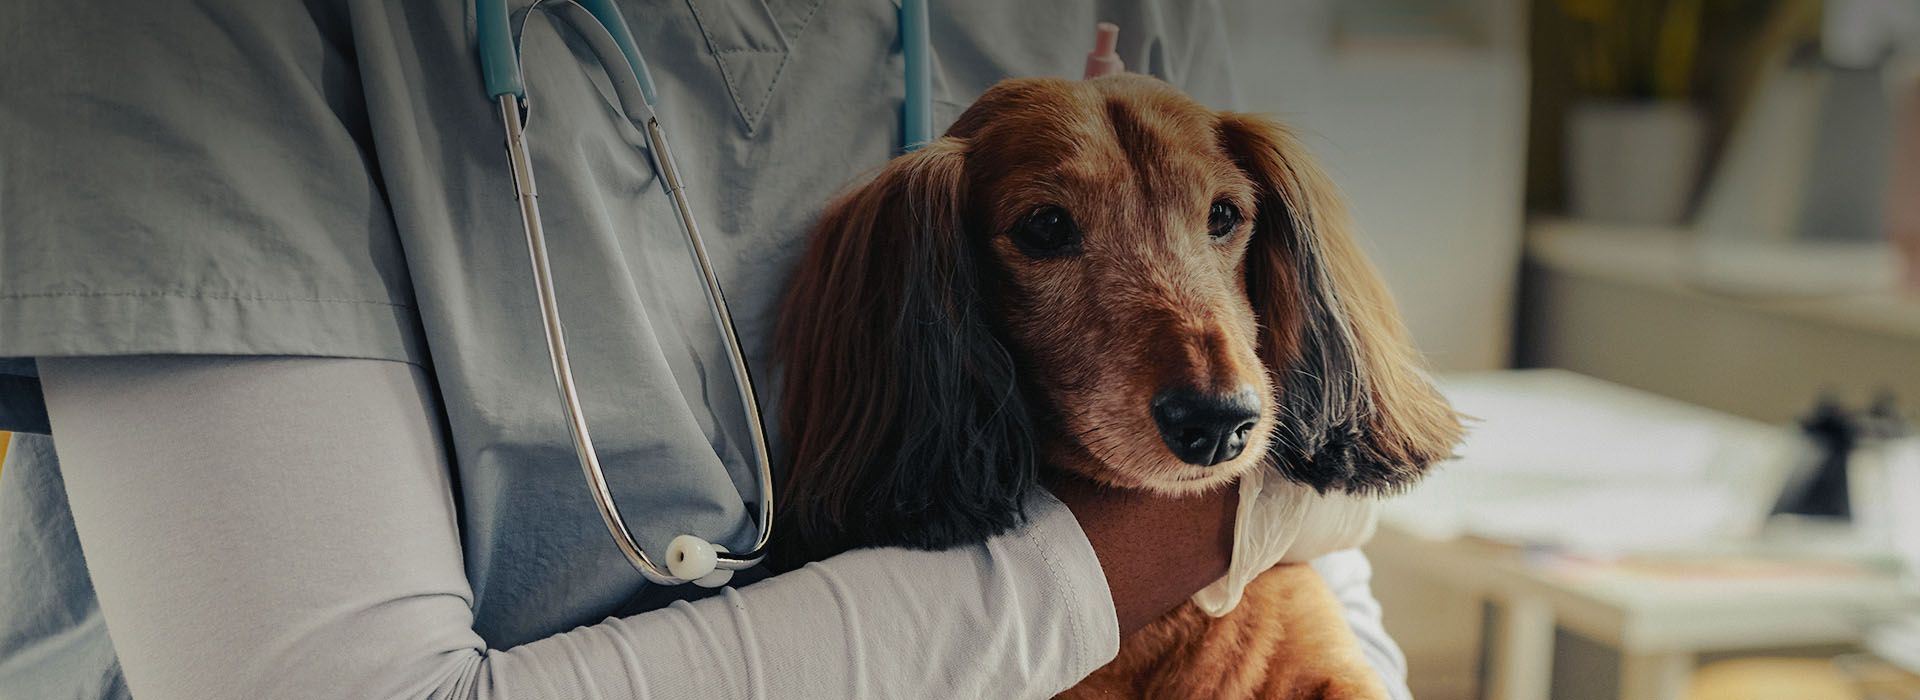 veterinarian cuddling cute dog at pet hospital